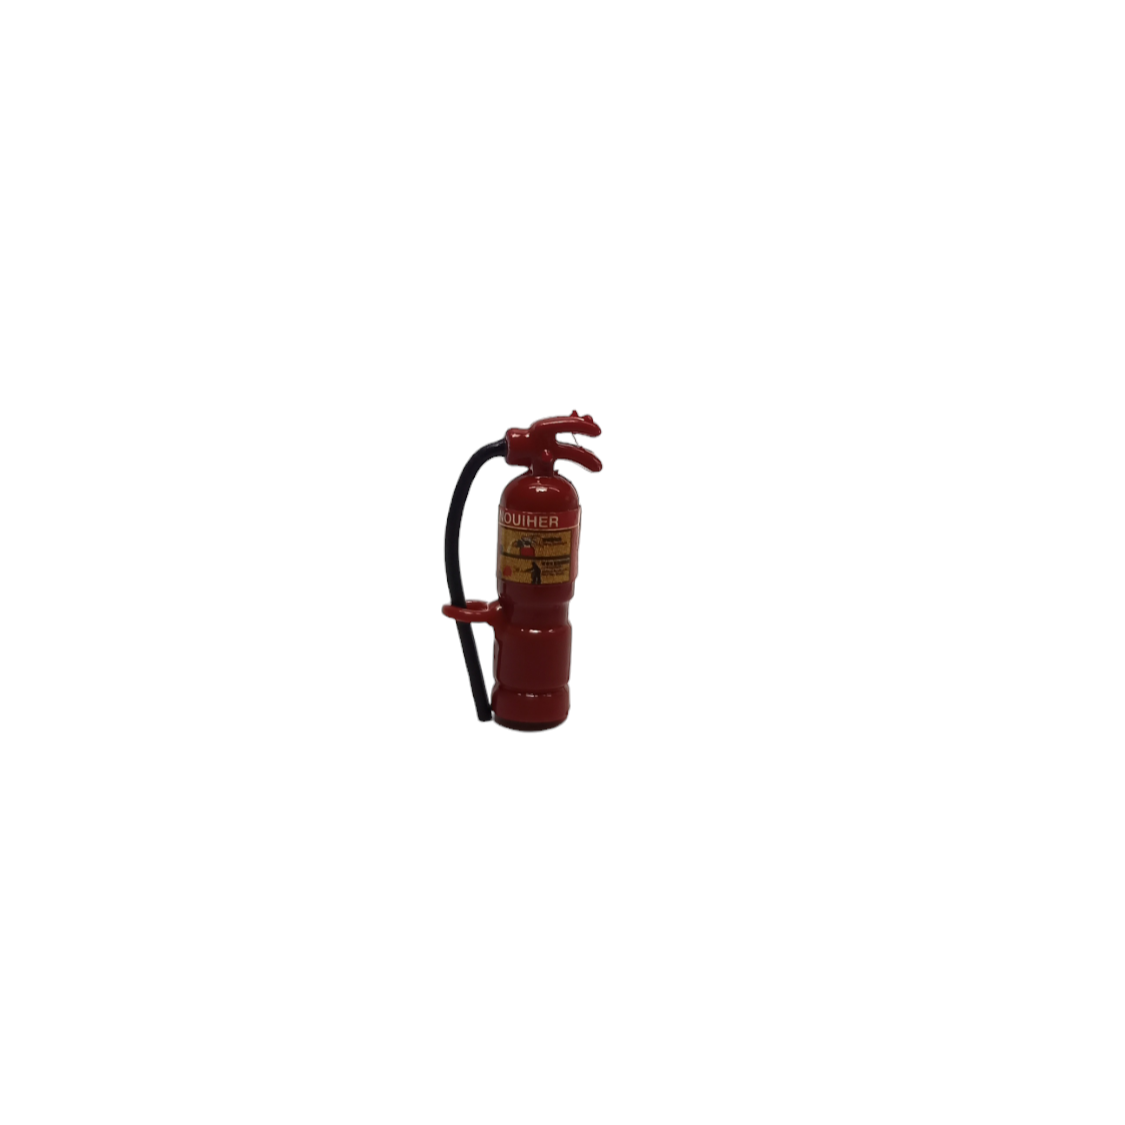 Mini Fire Extinguisher